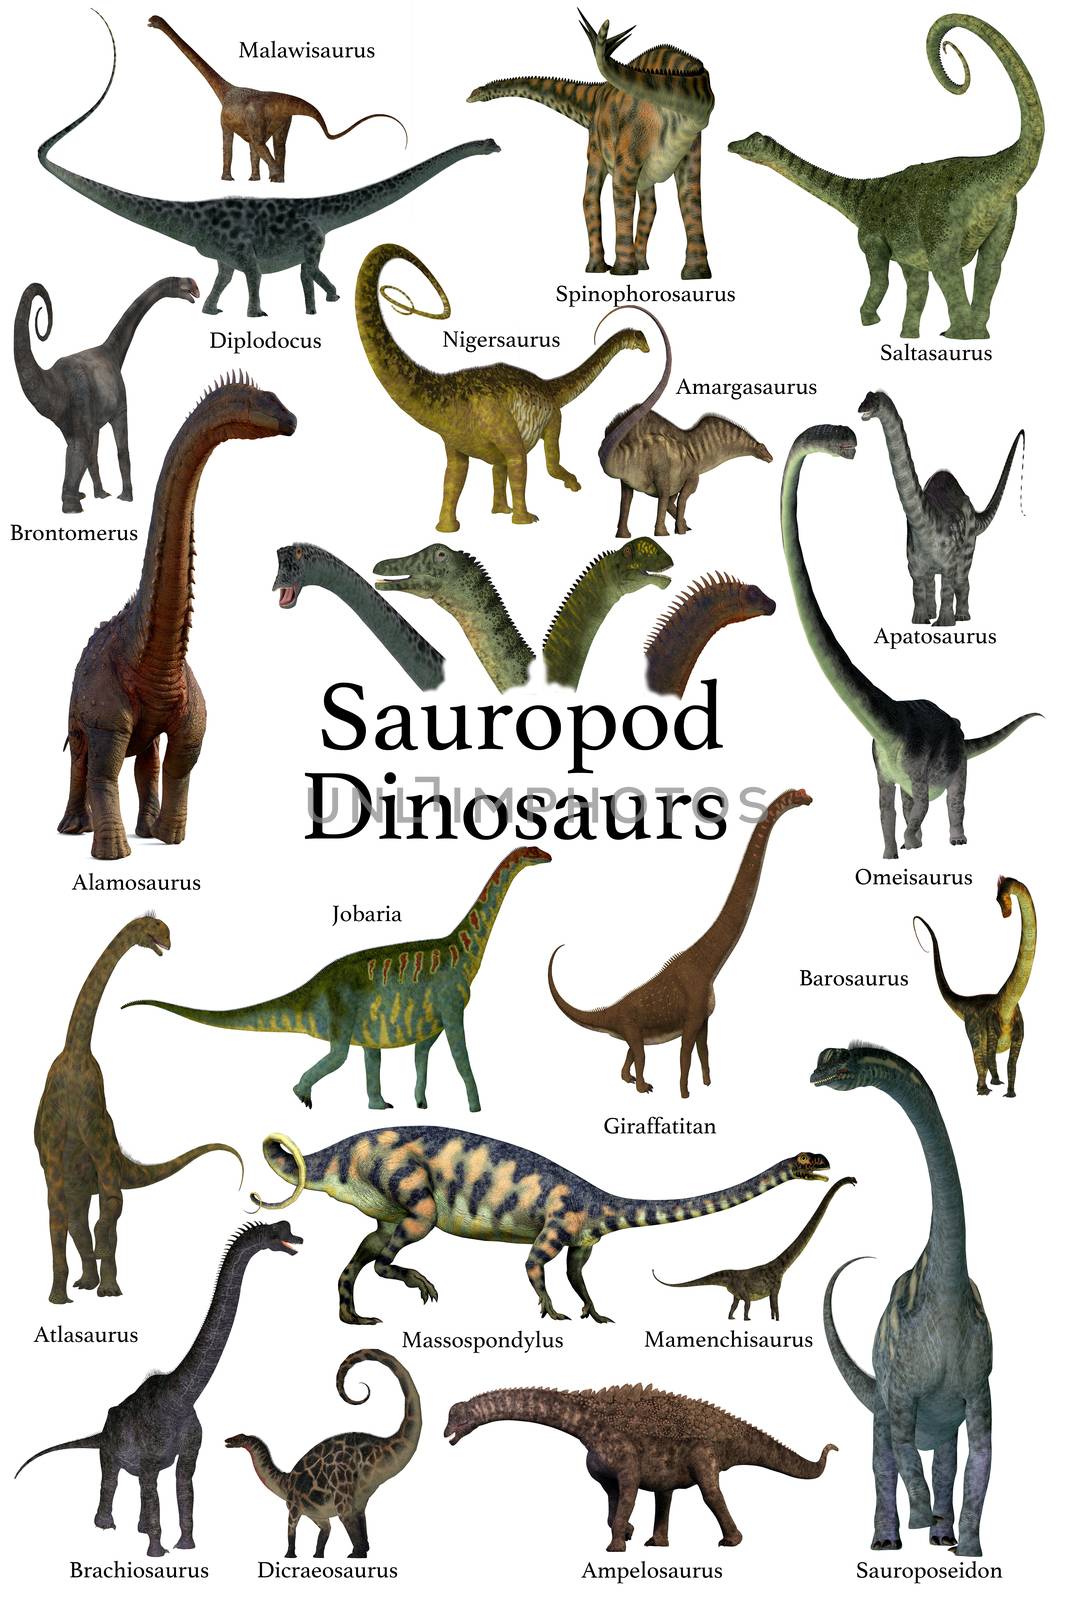 Sauropod Dinosaurs by Catmando